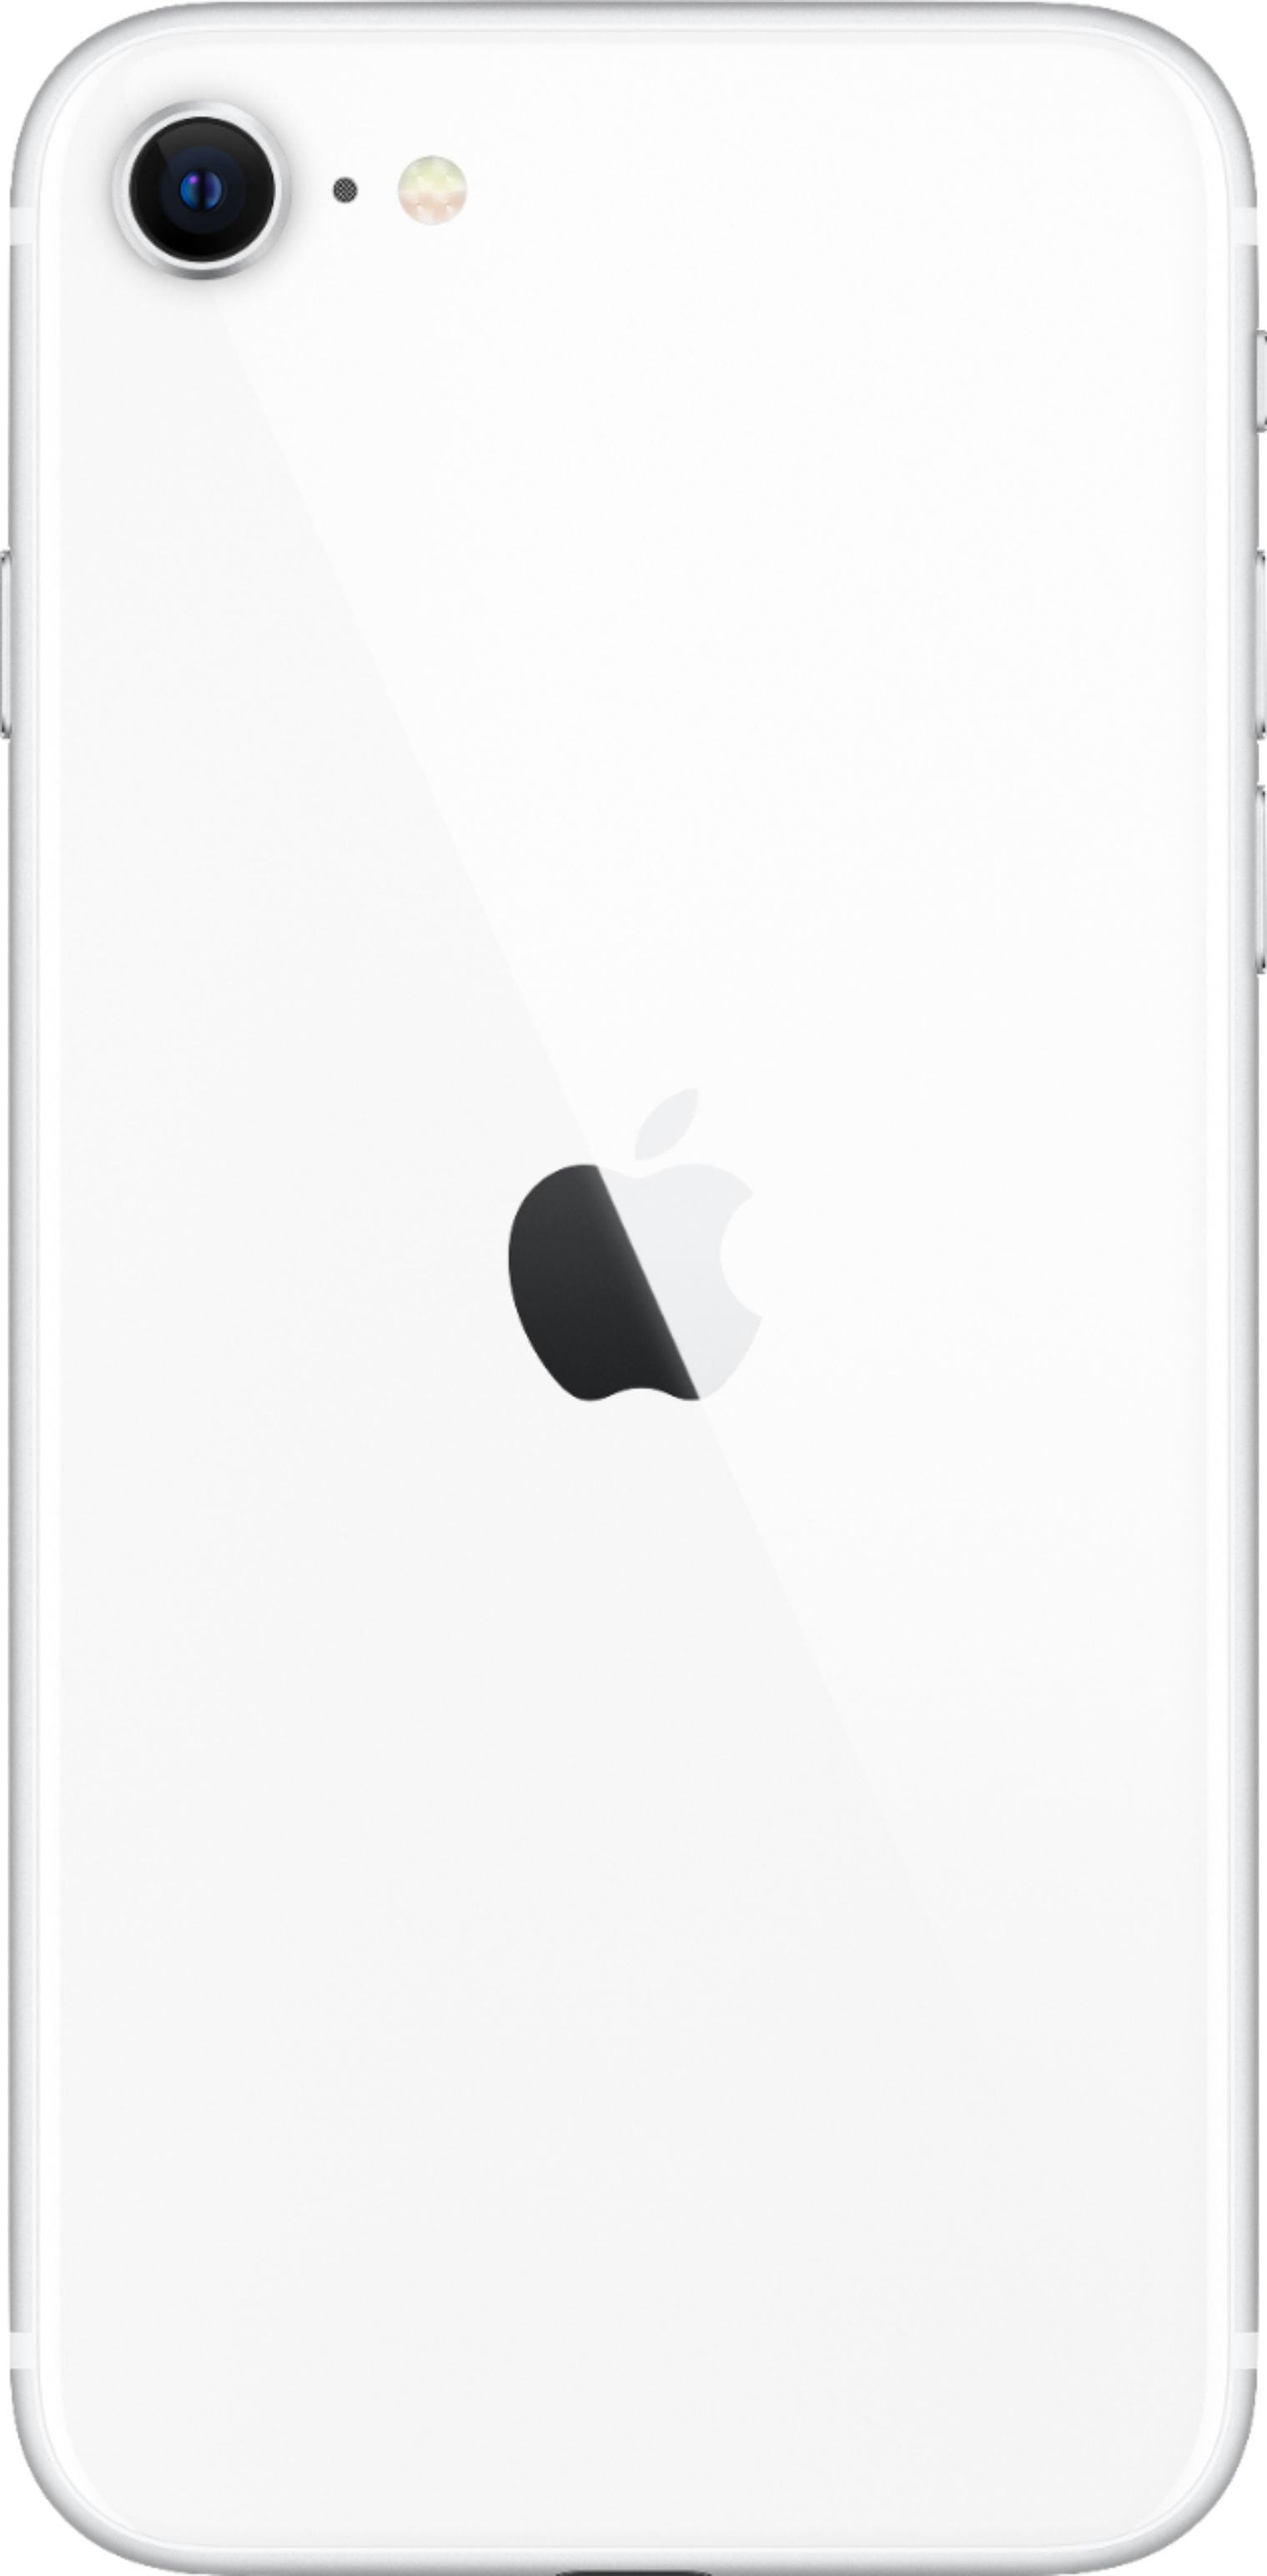 iPhone XR 128GB White (Unlocked) Refurbished A+ - Walmart.com